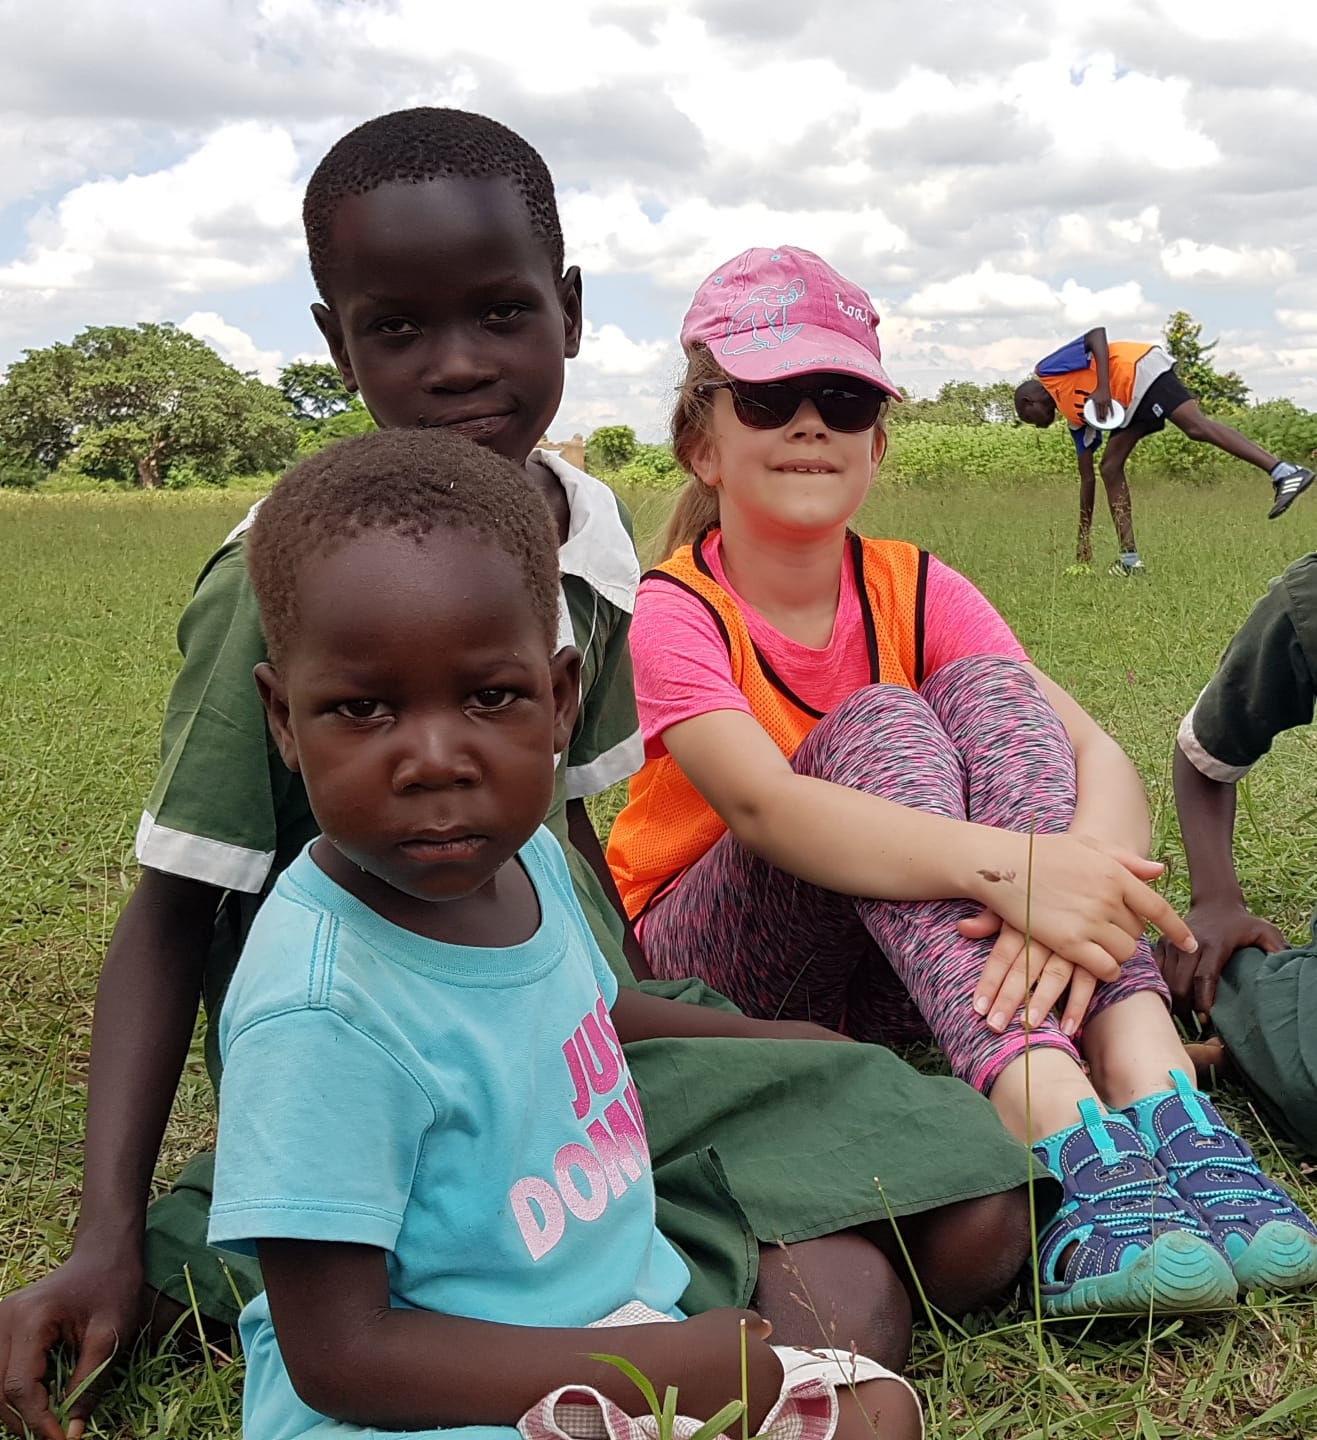 Children of aid worker taken to Uganda